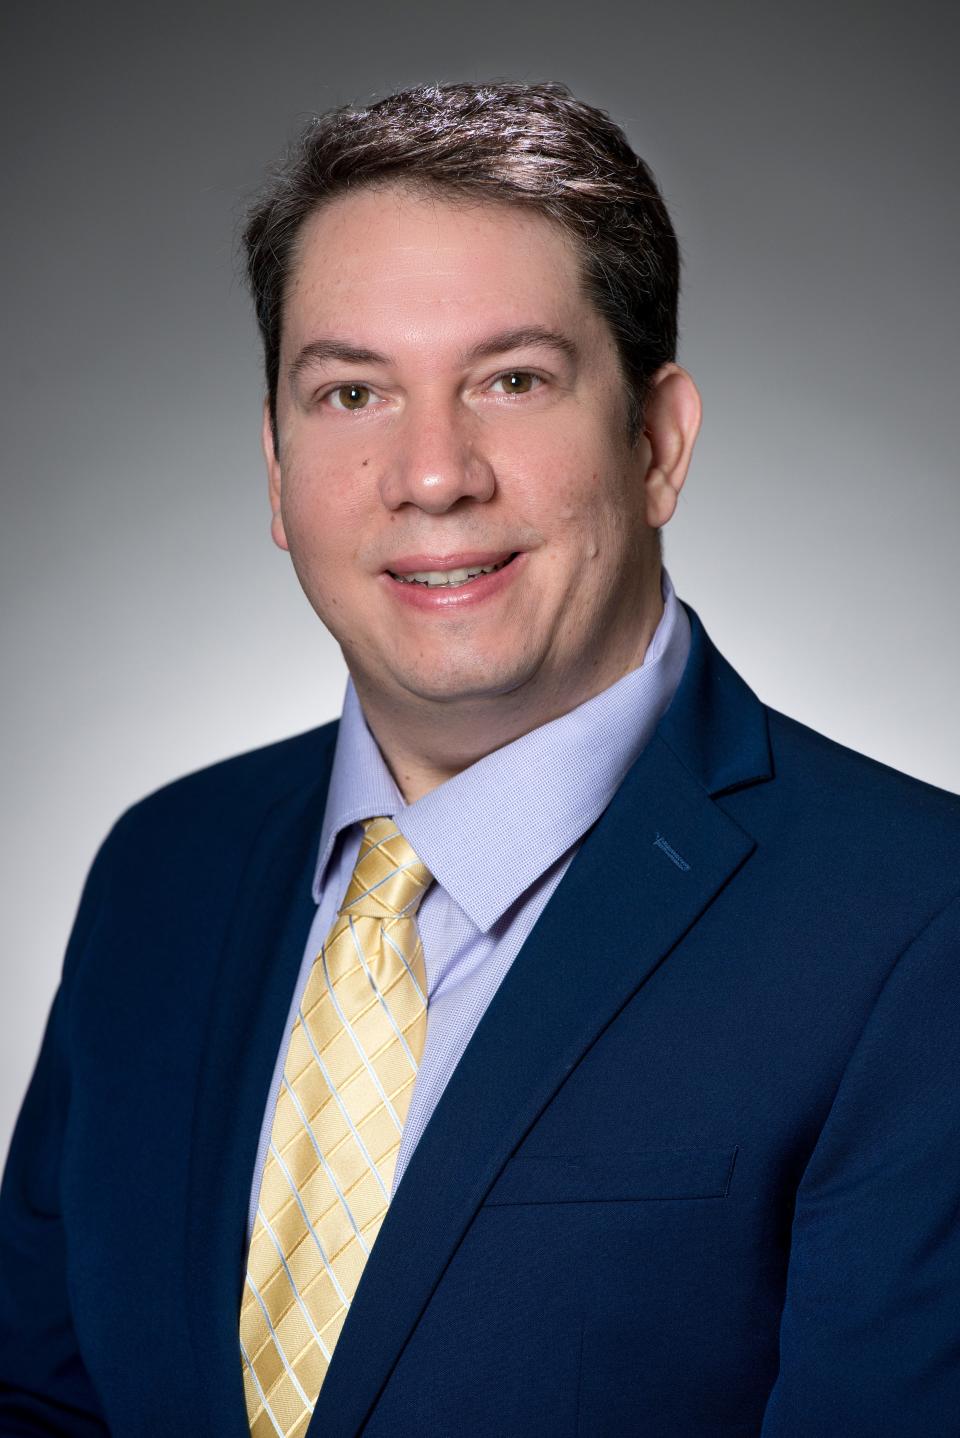 Steven Procopio is president of the Public Affairs Research Council of Louisiana.